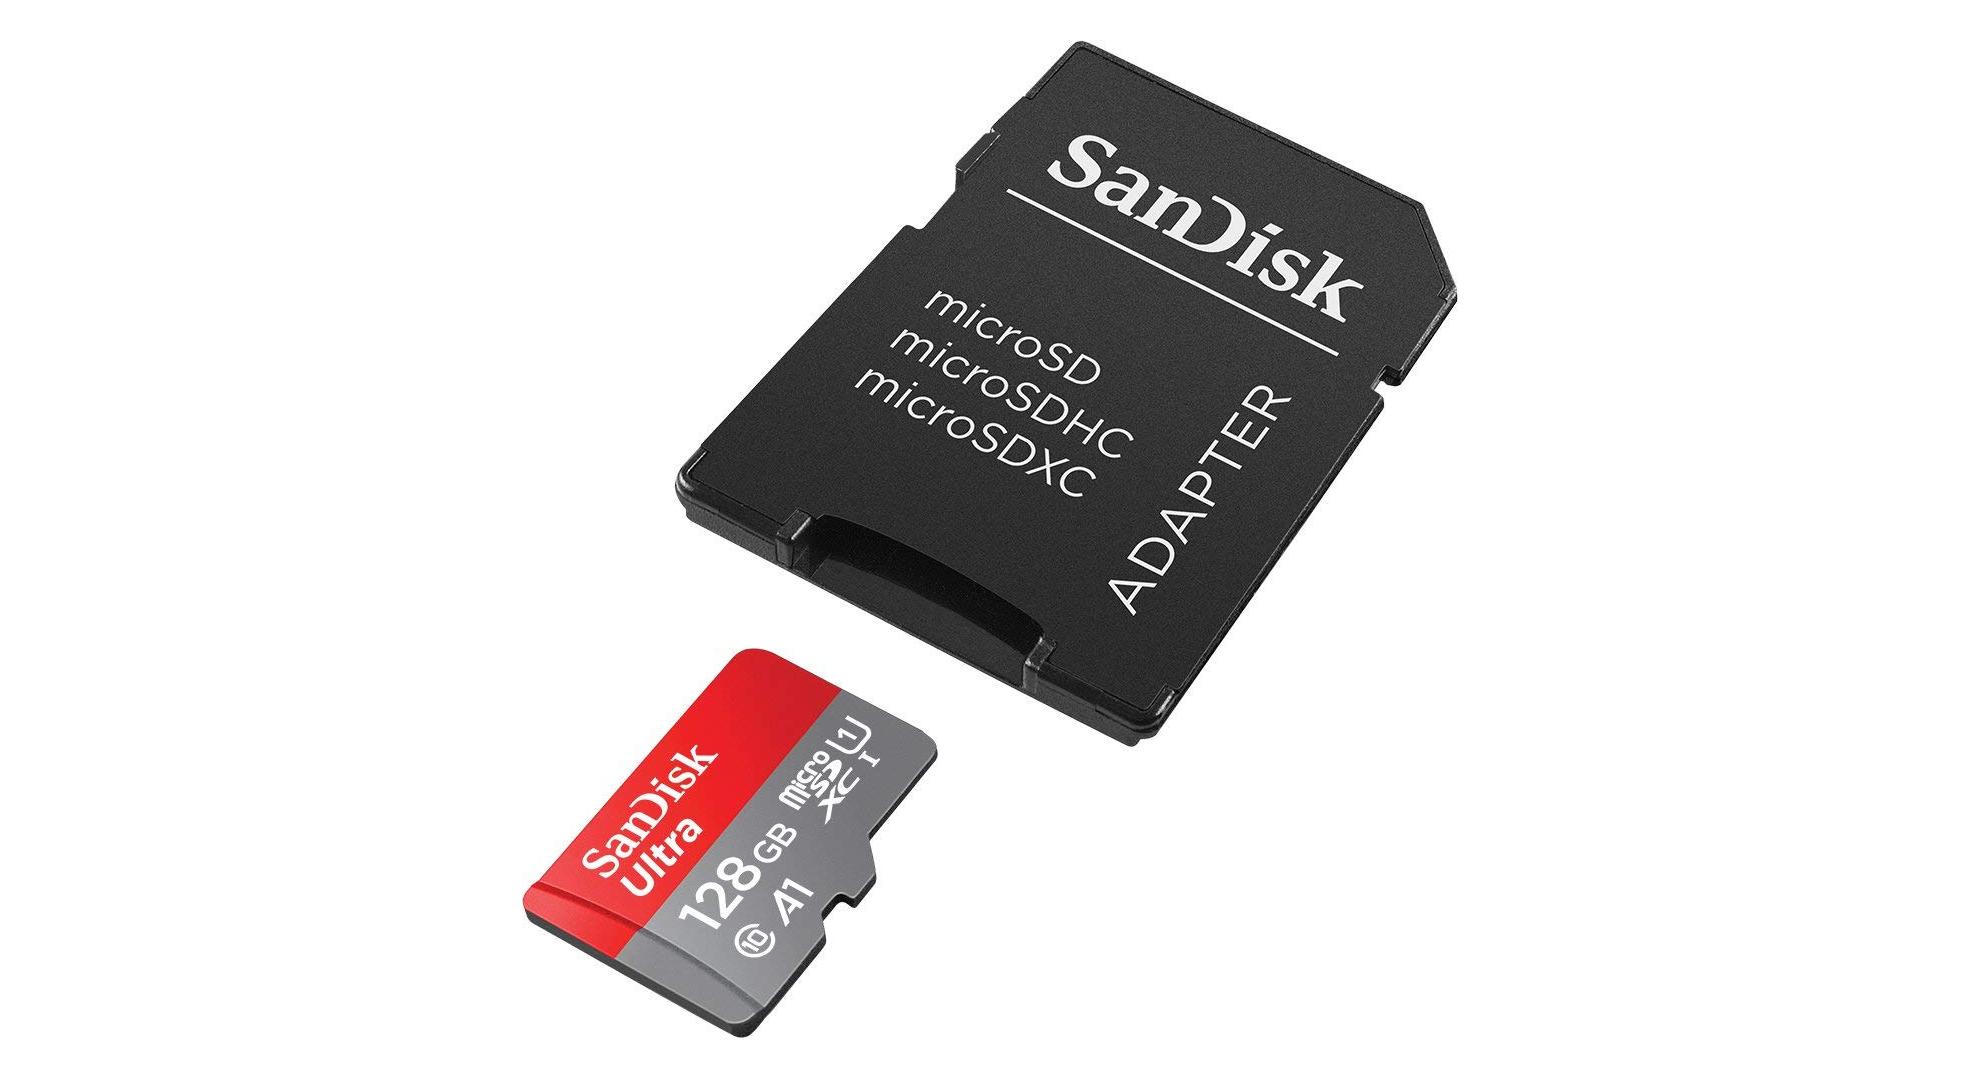 Nintendo Switch, smartphones : la carte mémoire MicroSD 128 Go est